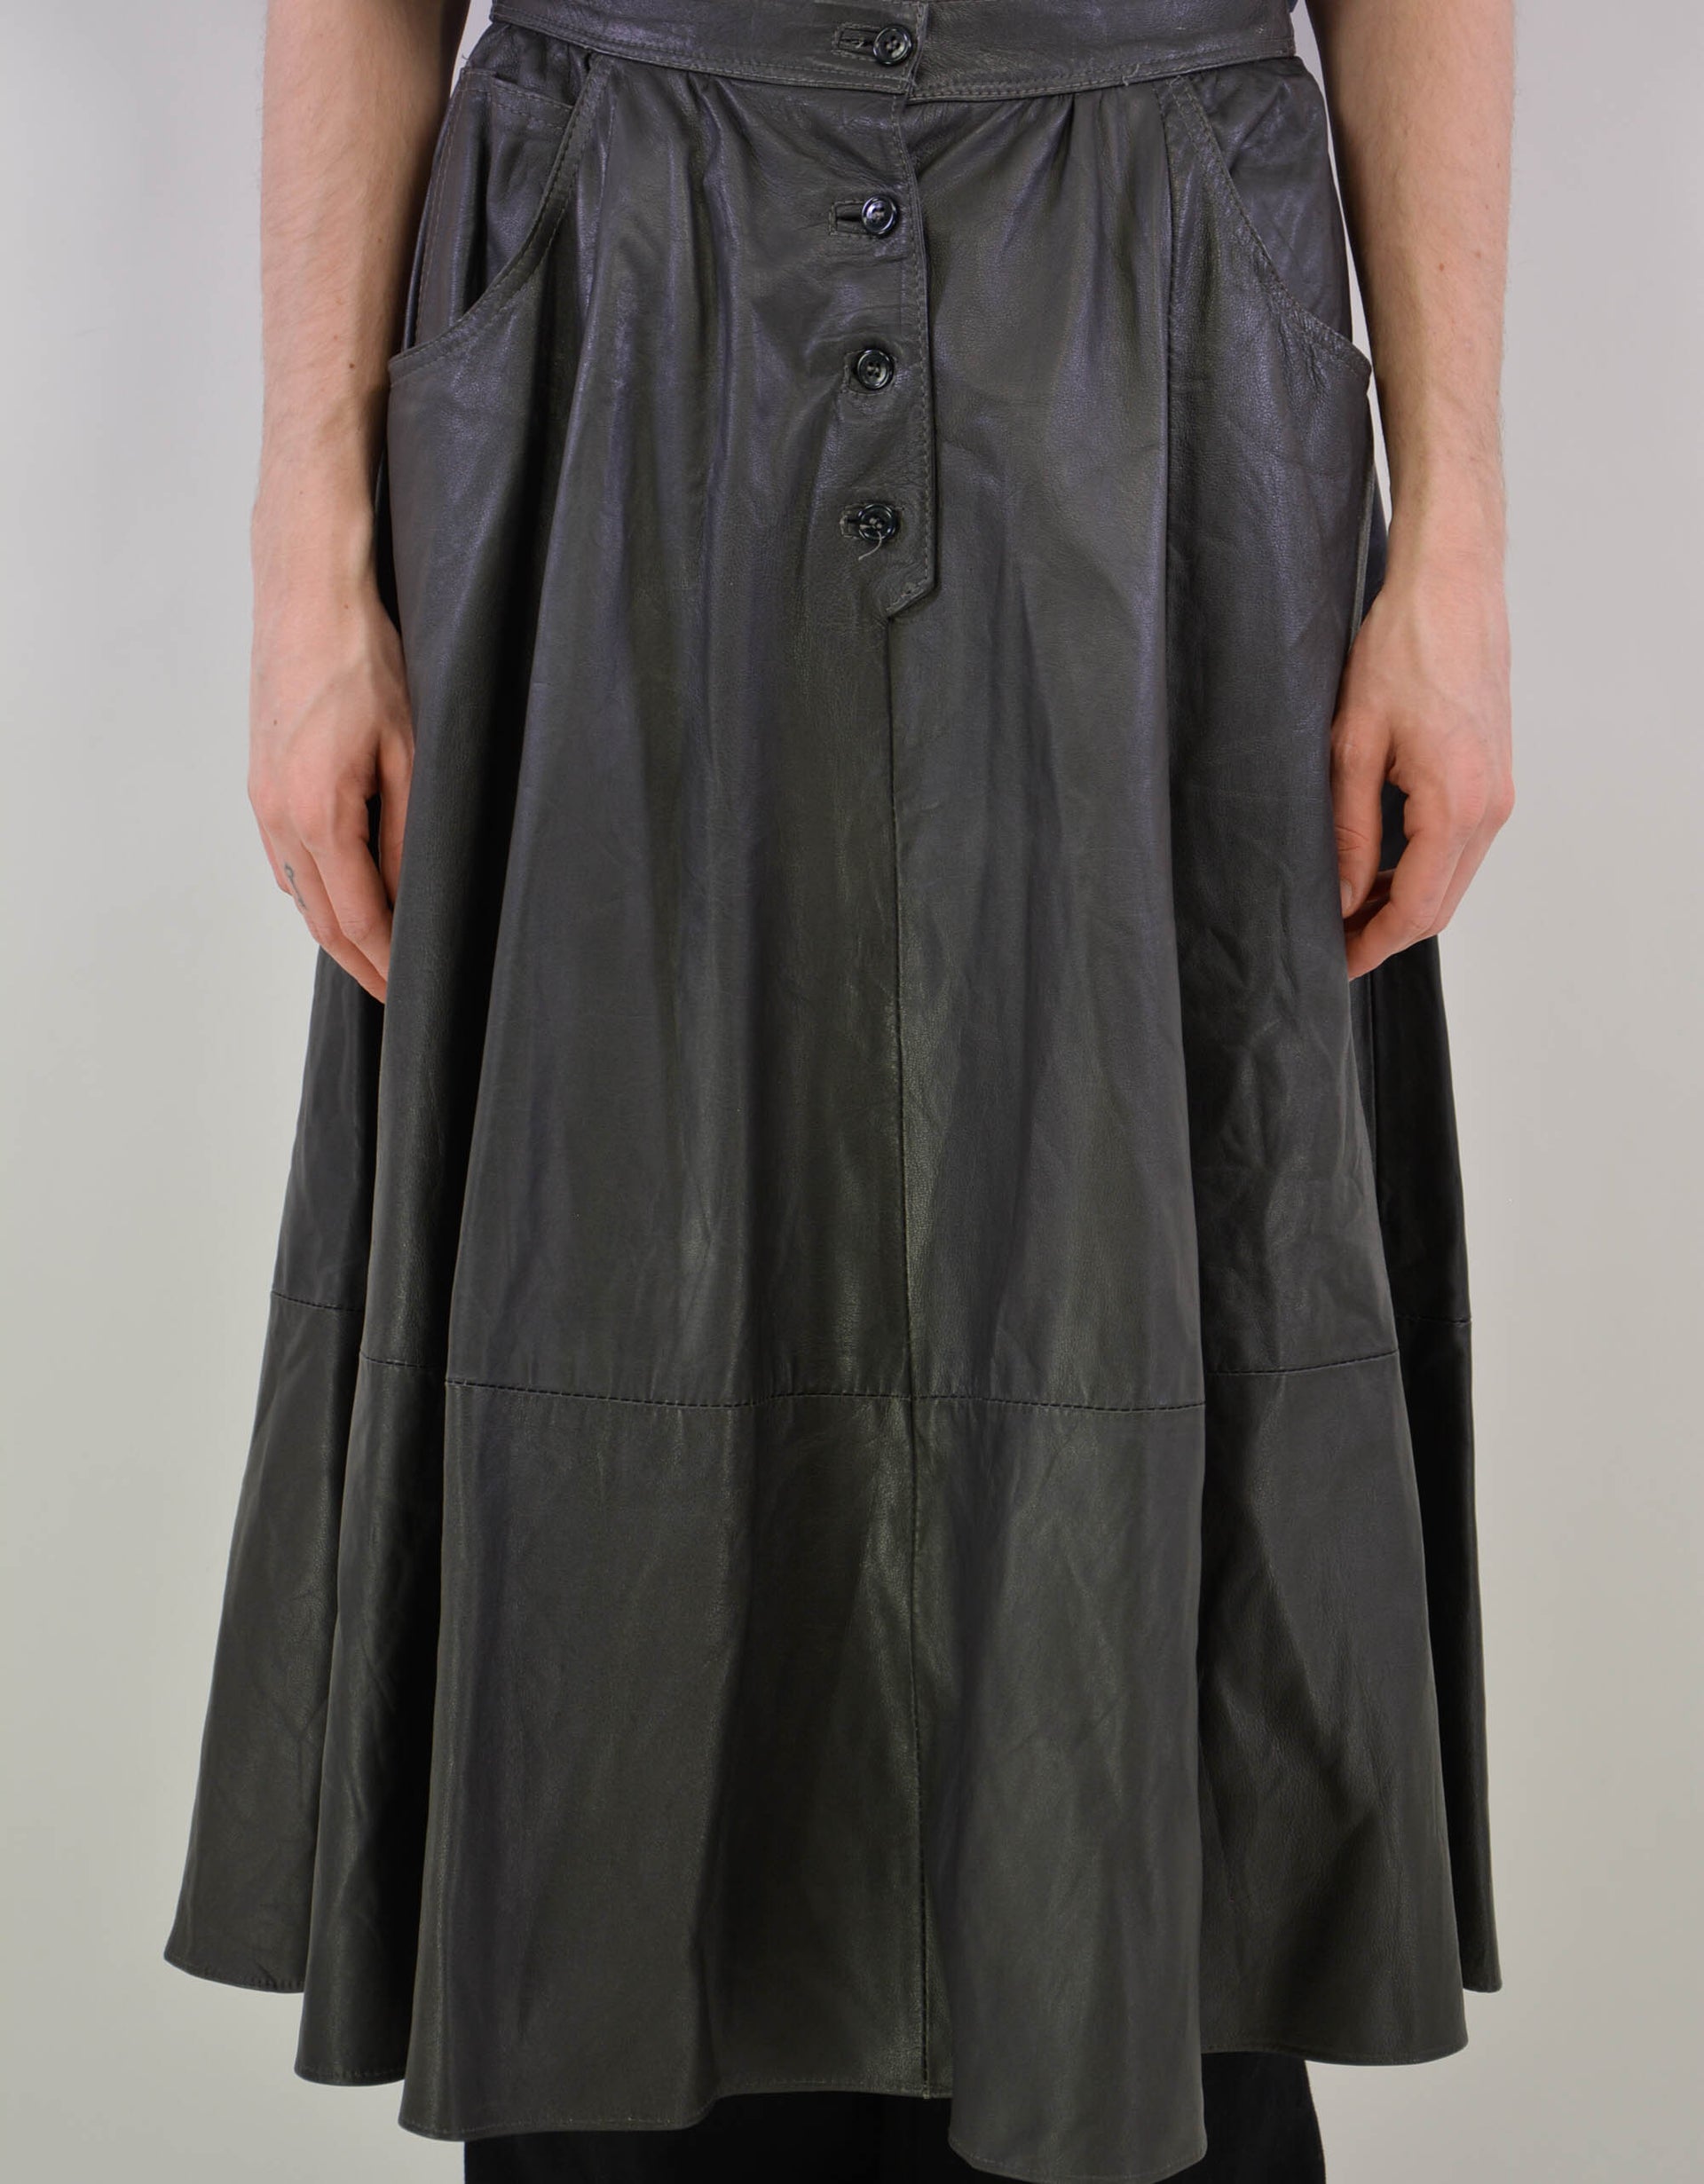 Black leather skirt - PICKNWEIGHT - VINTAGE KILO STORE